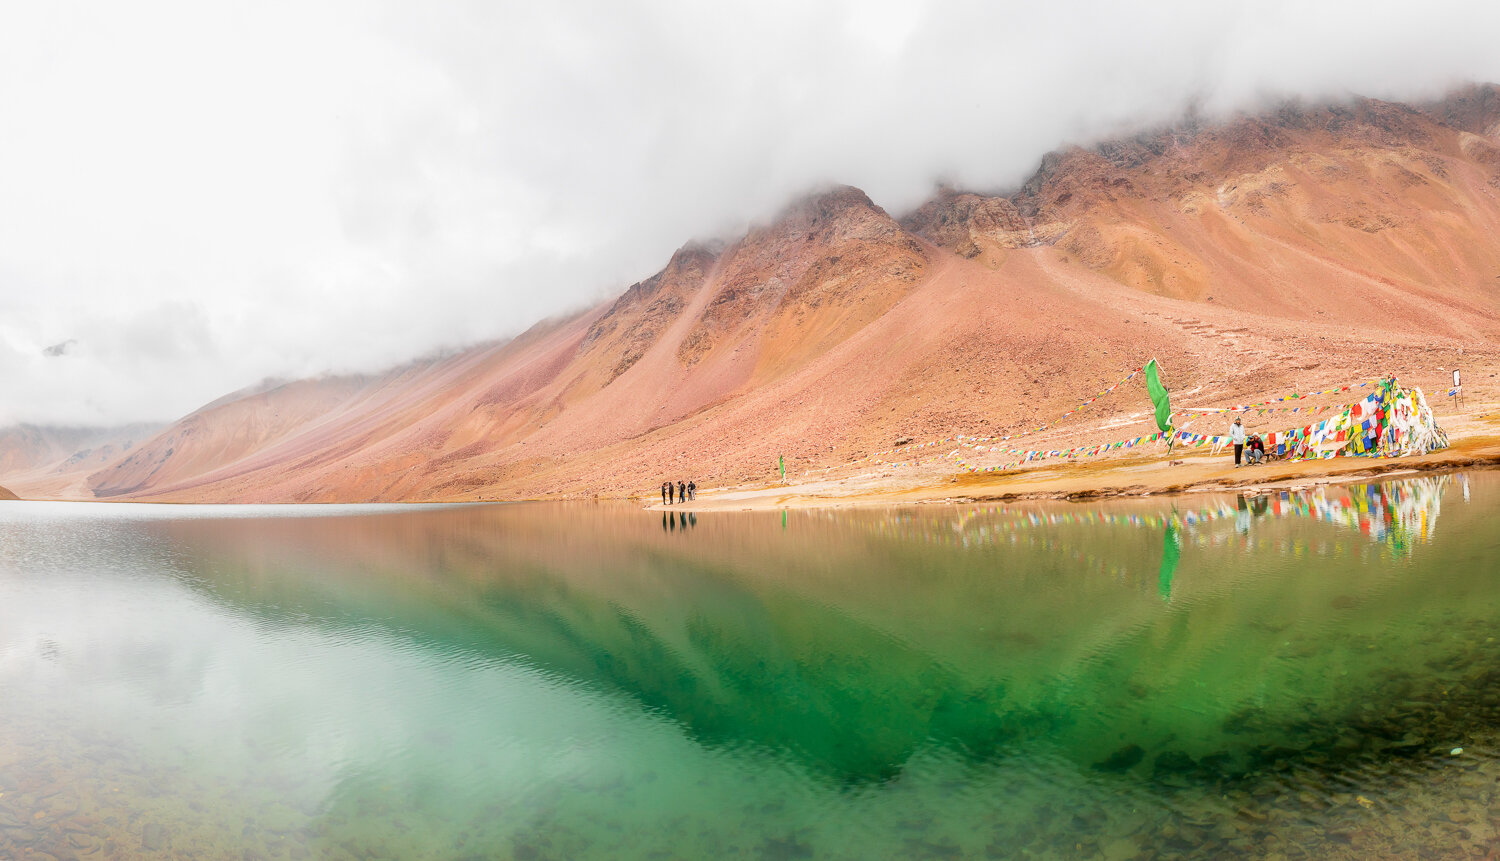 beautiful chandratal lake pano by prathamesh dixit.jpg